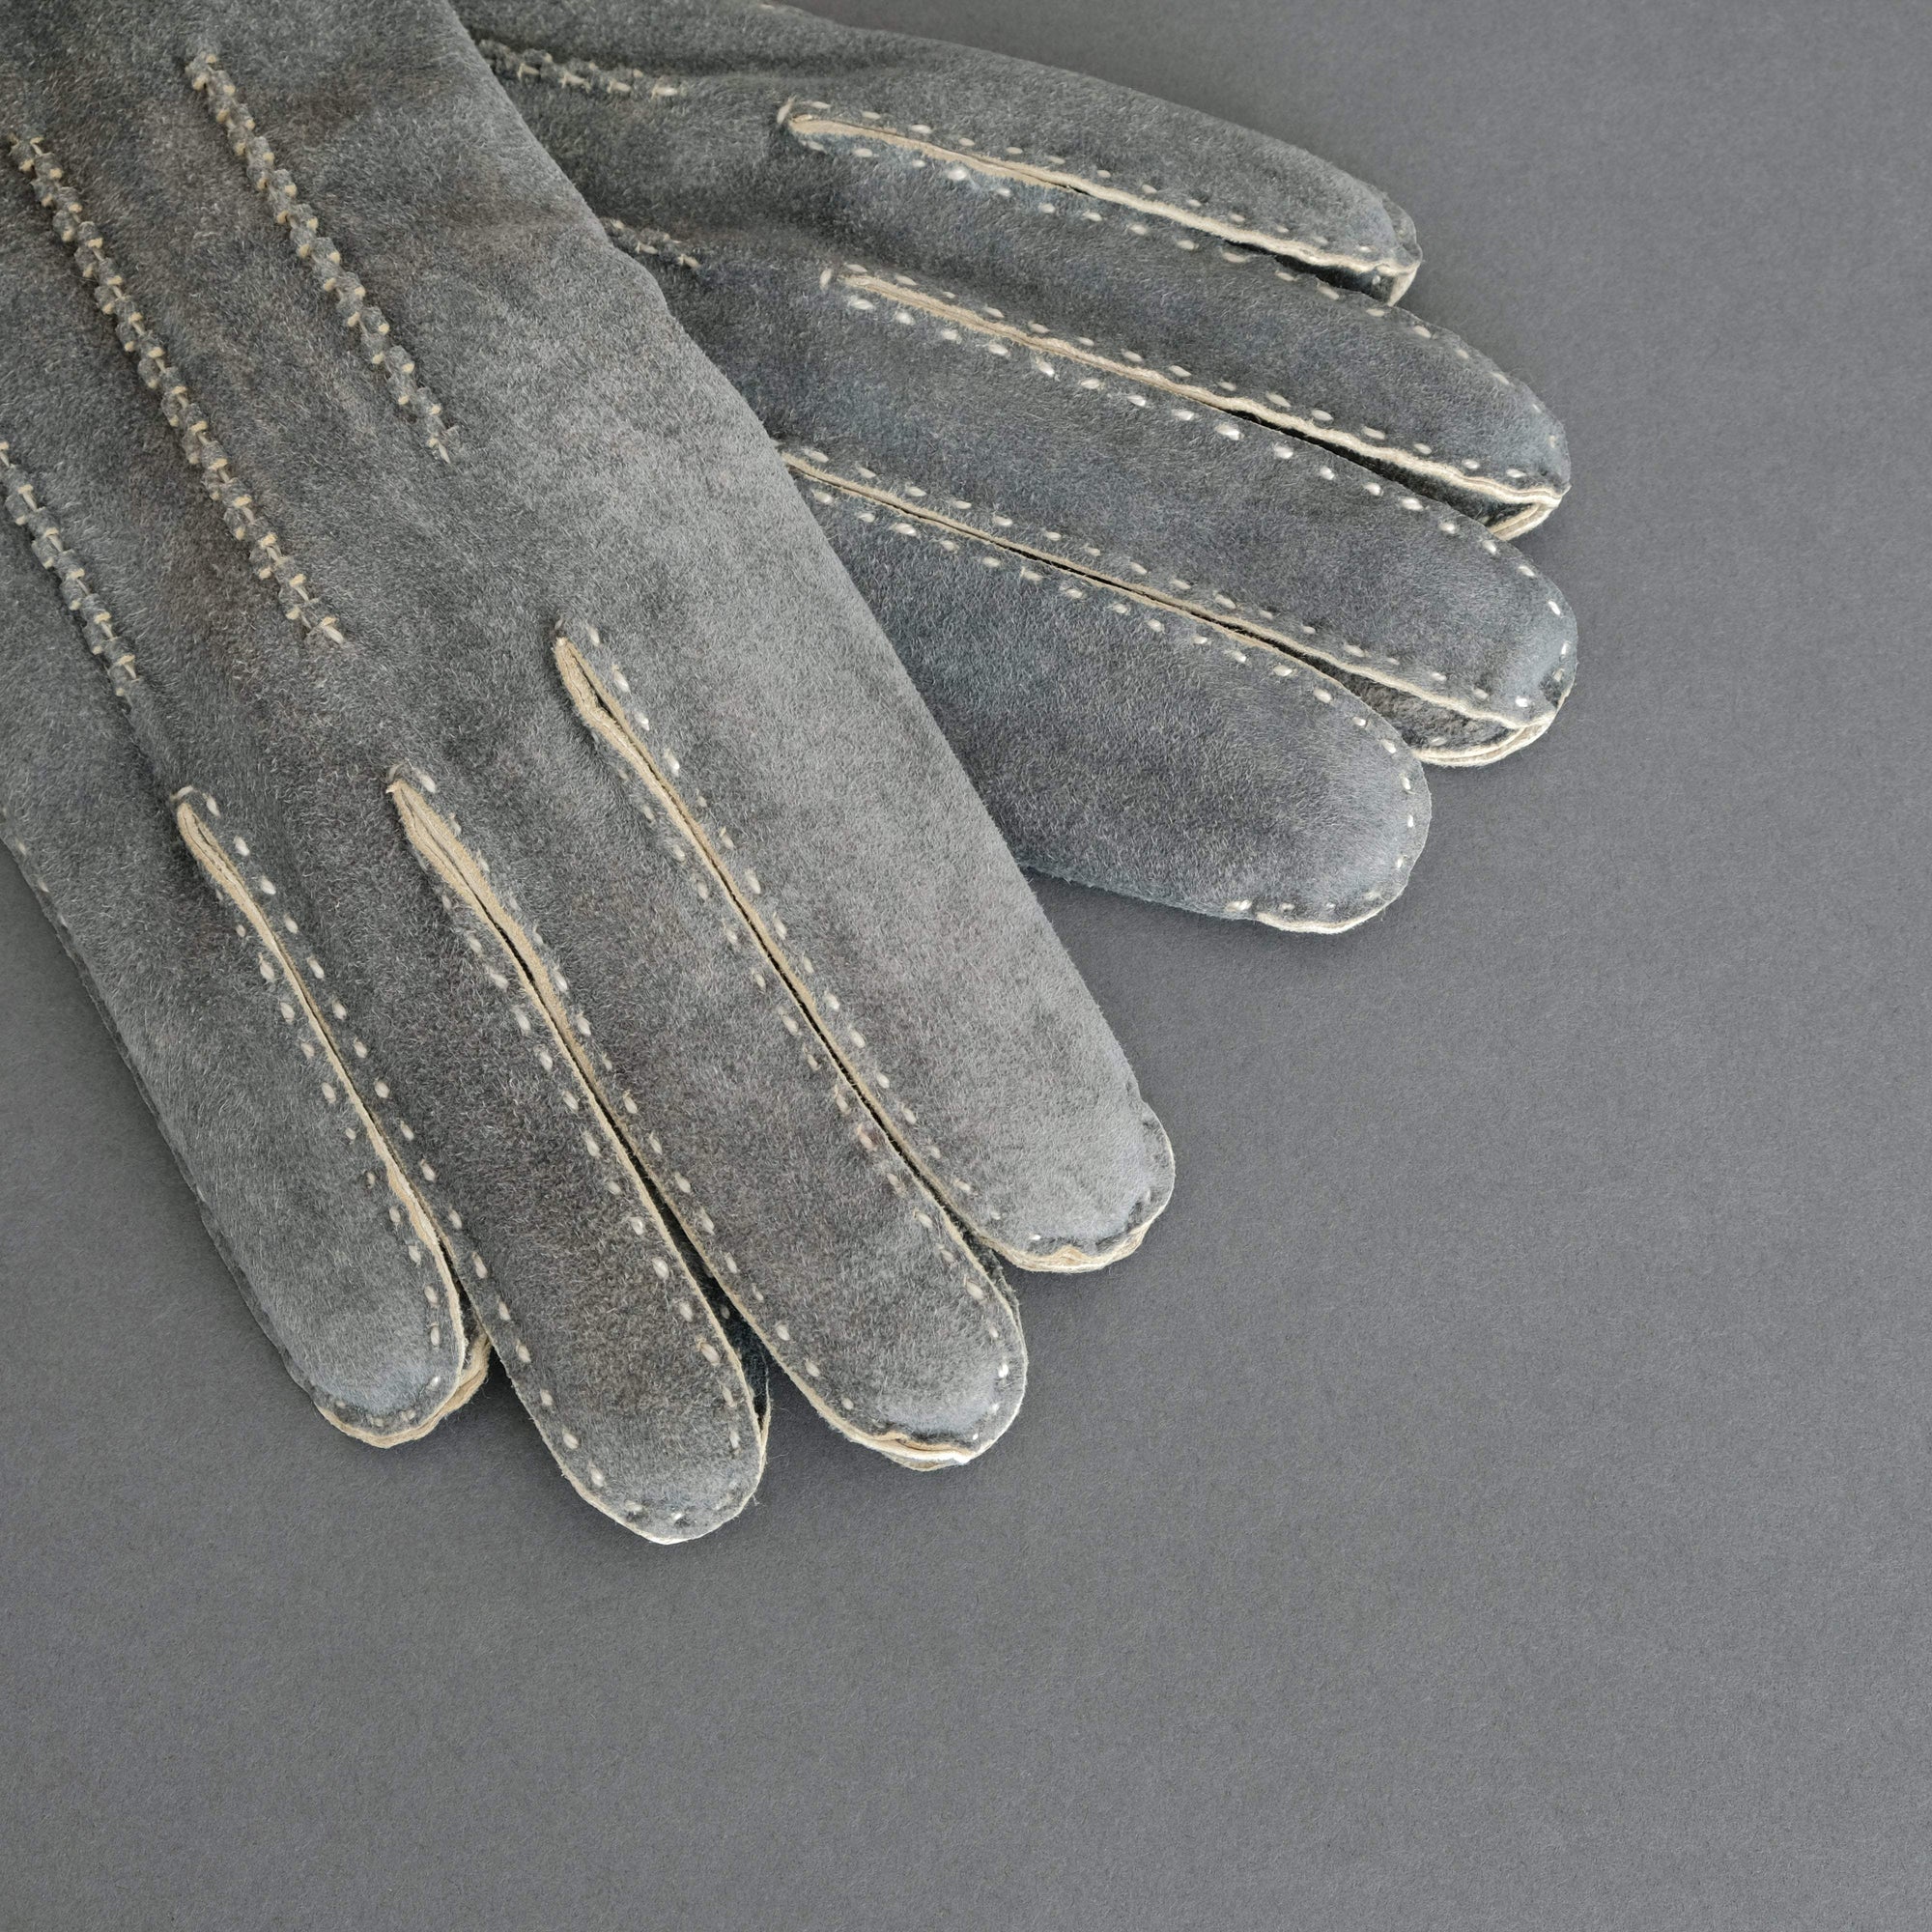 Gentlemen&#39;s Gloves from Grey-Blue Goatskin Lined with Cashmere - TR Handschuhe Wien - Thomas Riemer Handmade Gloves